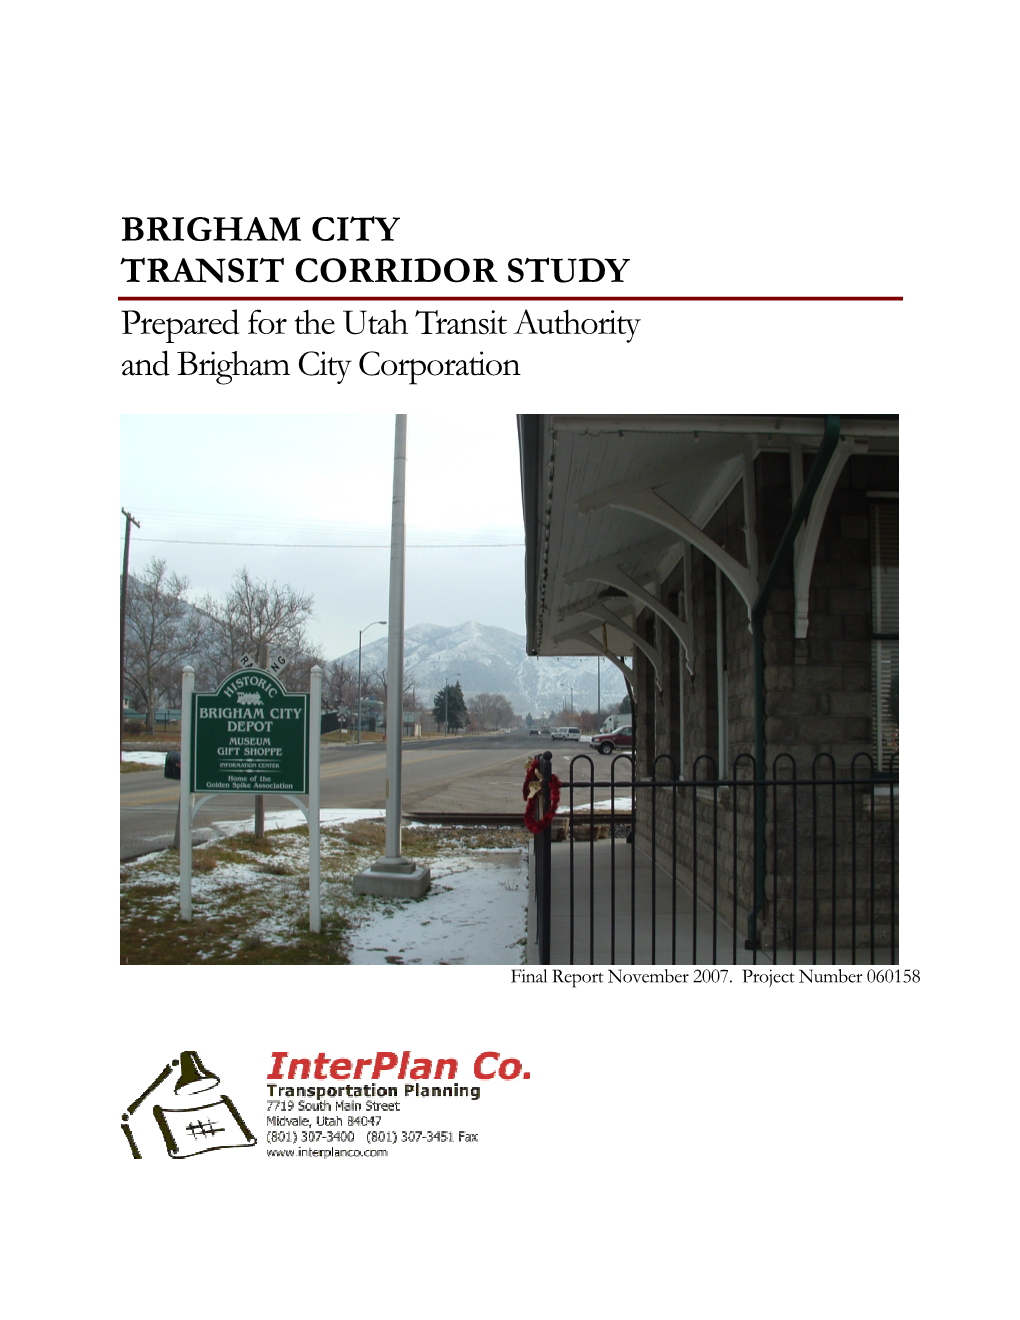 BRIGHAM CITY TRANSIT CORRIDOR STUDY Prepared for the Utah Transit Authority and Brigham City Corporation